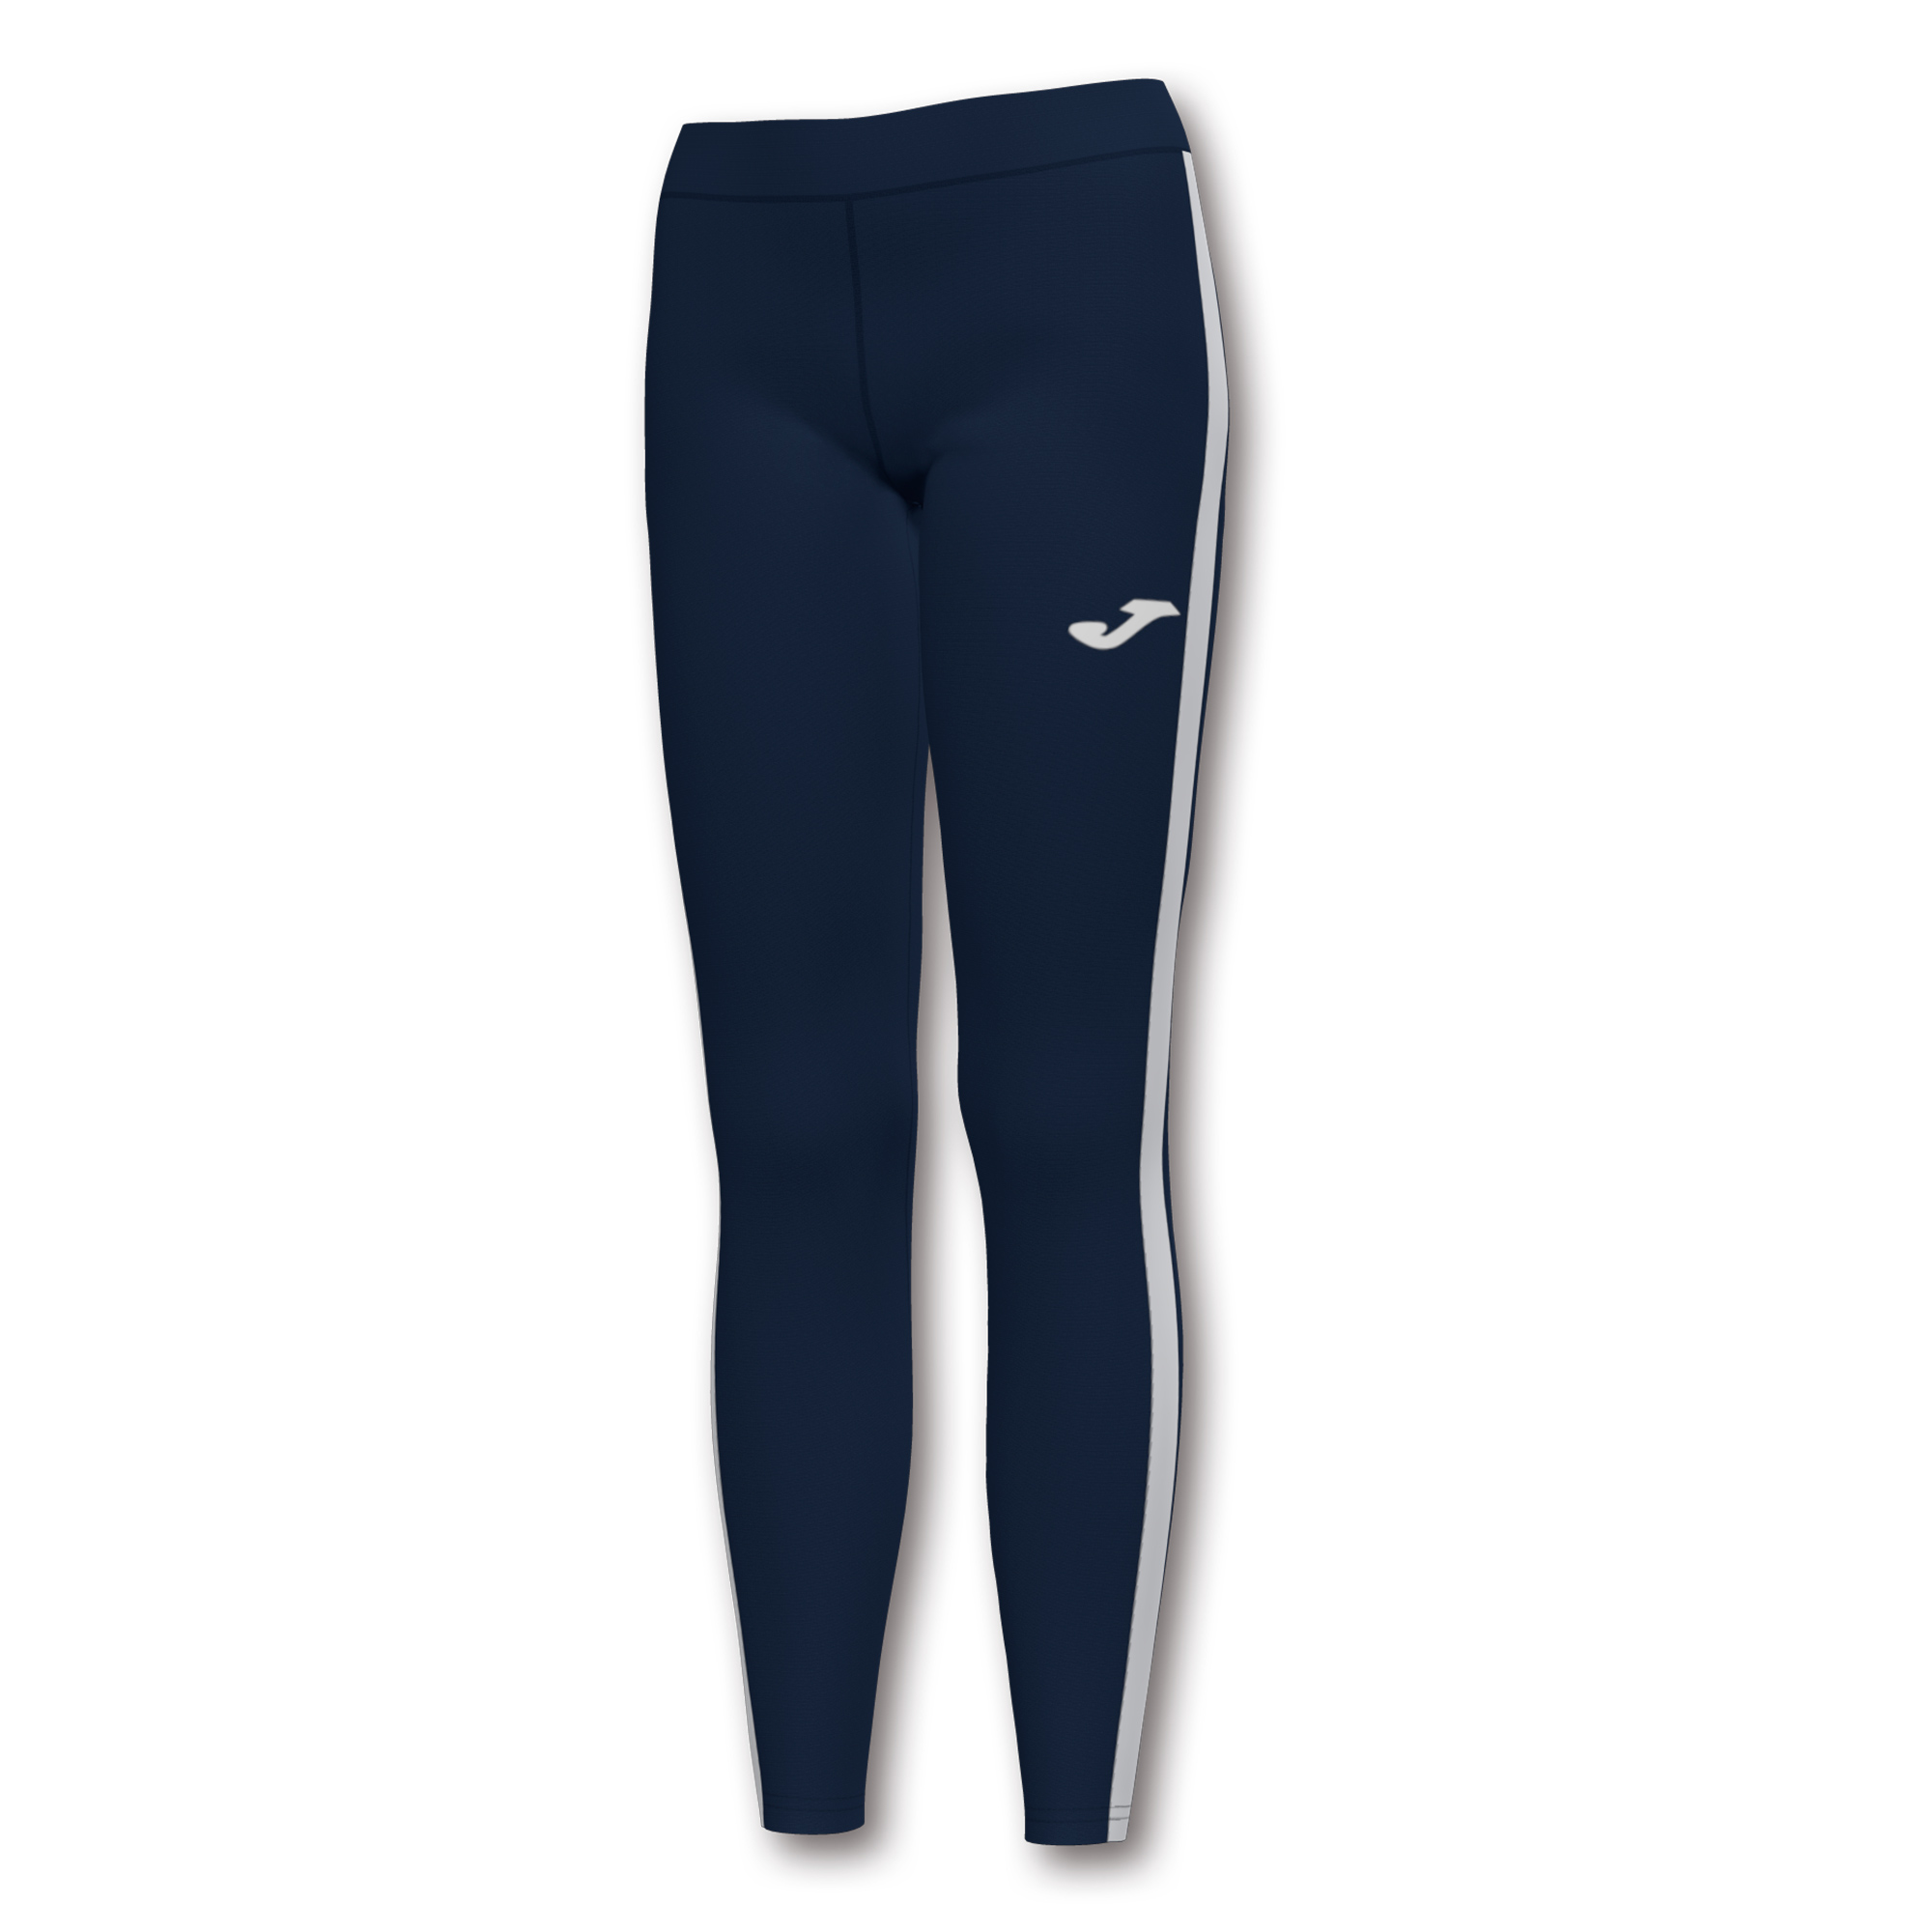 Спортивные штаны (леггинсы) Joma ELITE VII Темно-синий/Белый